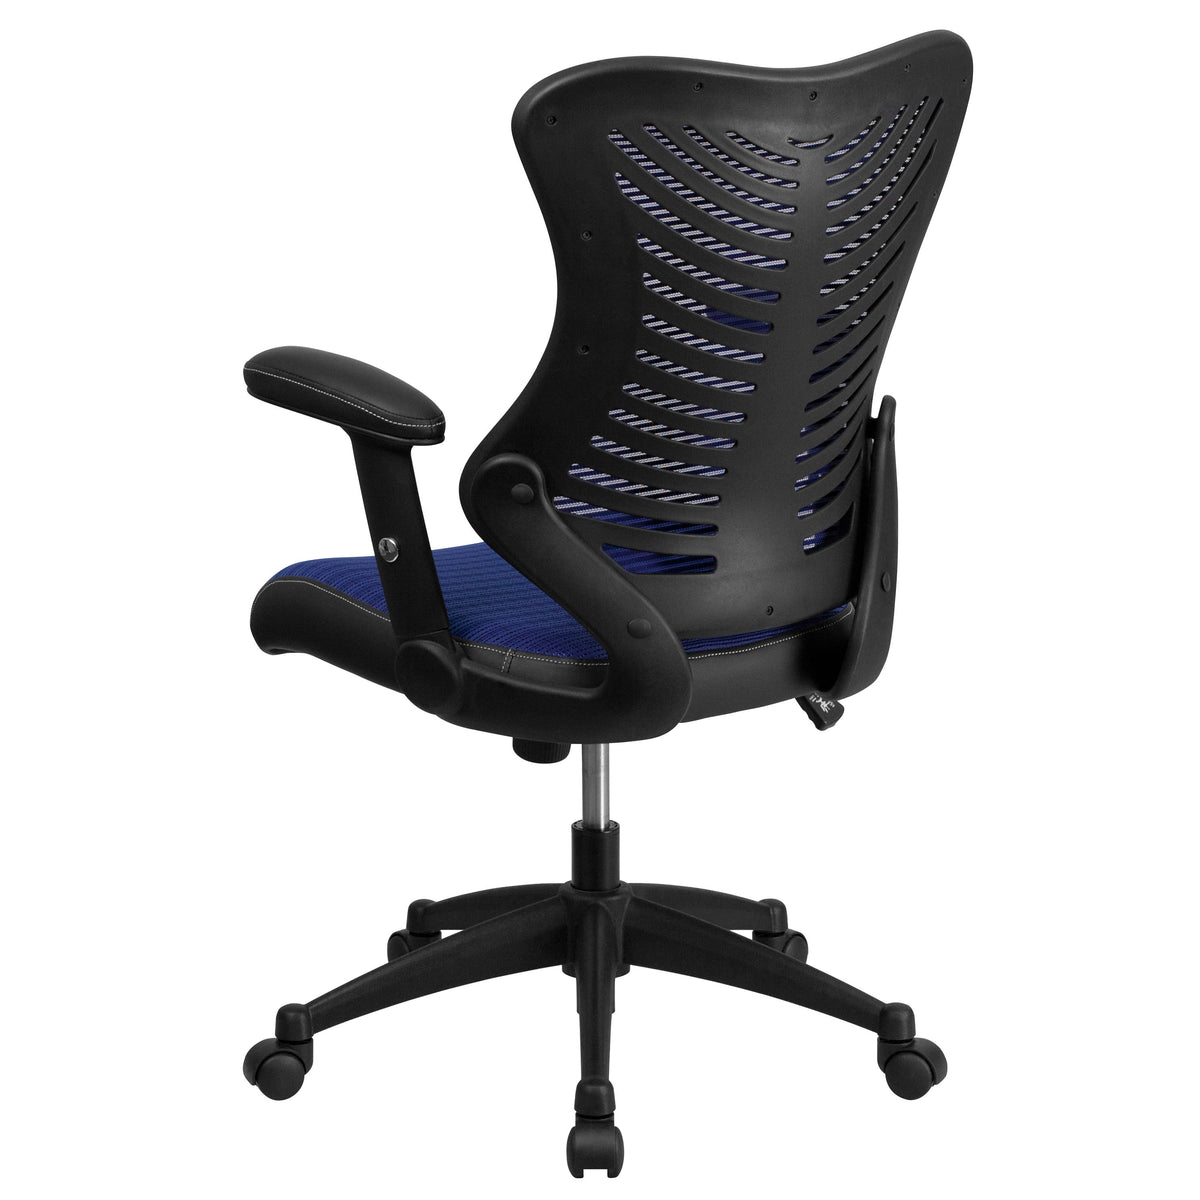 Blue Mesh |#| High Back Designer Blue Mesh Executive Ergonomic Chair with Adjustable Arms